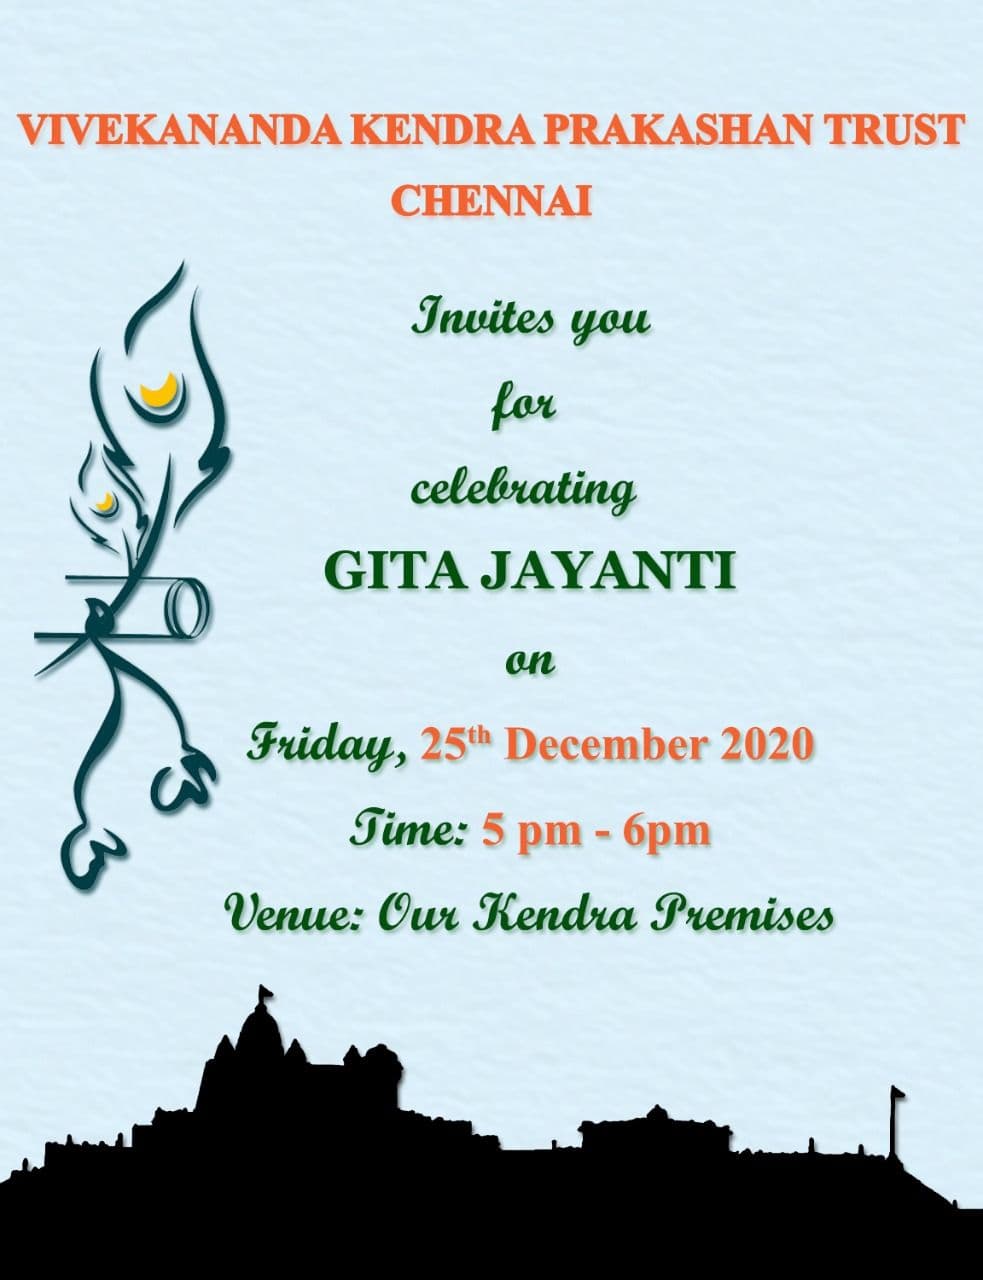 Geeta Jayanti - Chennai